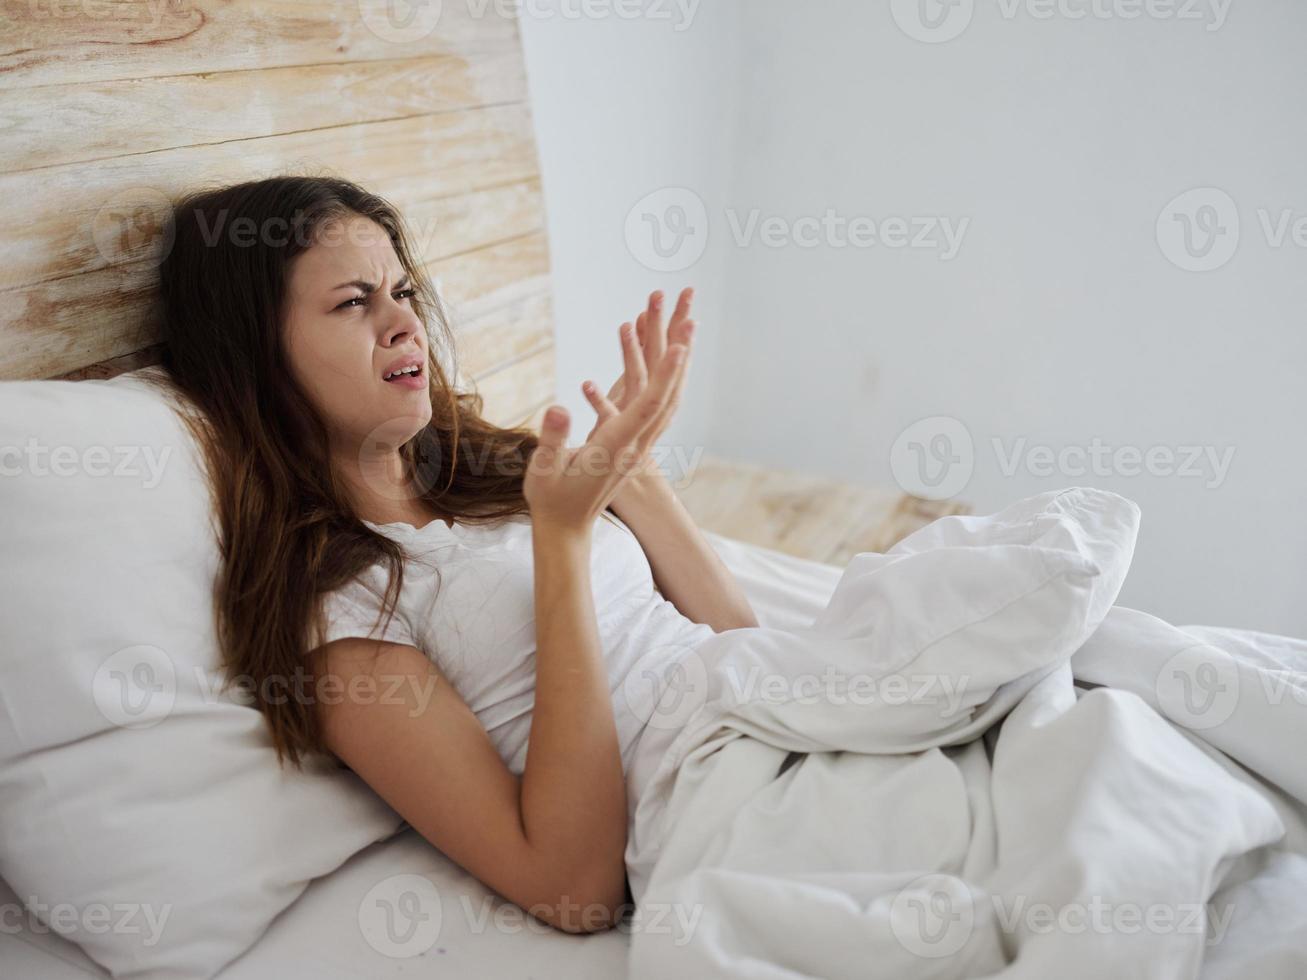 verärgert Frau Lügen im Bett kalt Gefühl nicht wohl Lebensstil foto